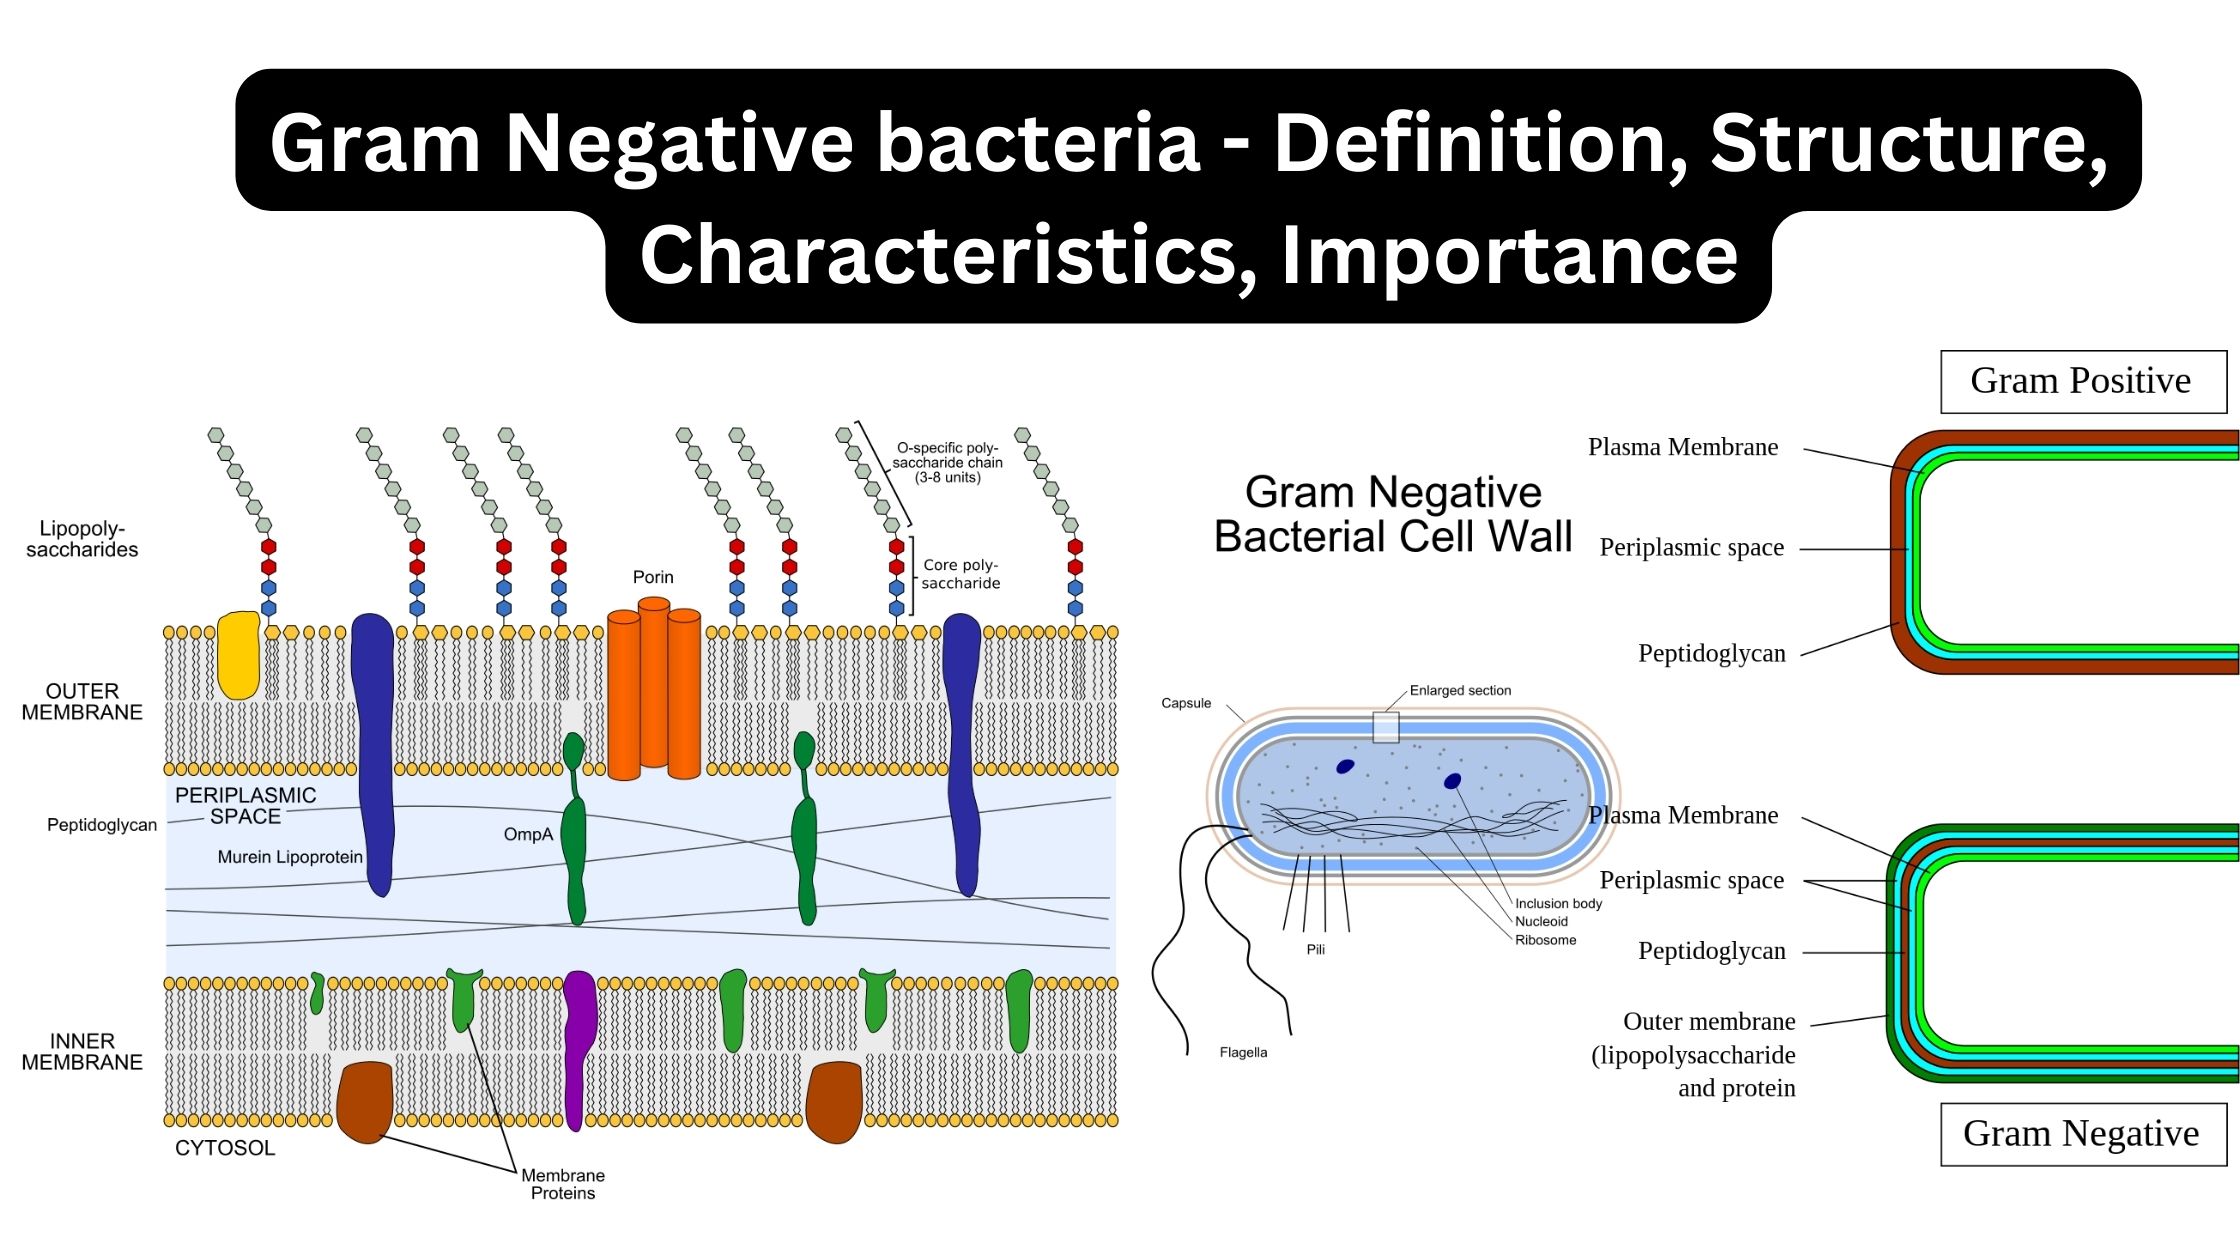 Gram Negative bacteria - Definition, Structure, Characteristics, Importance